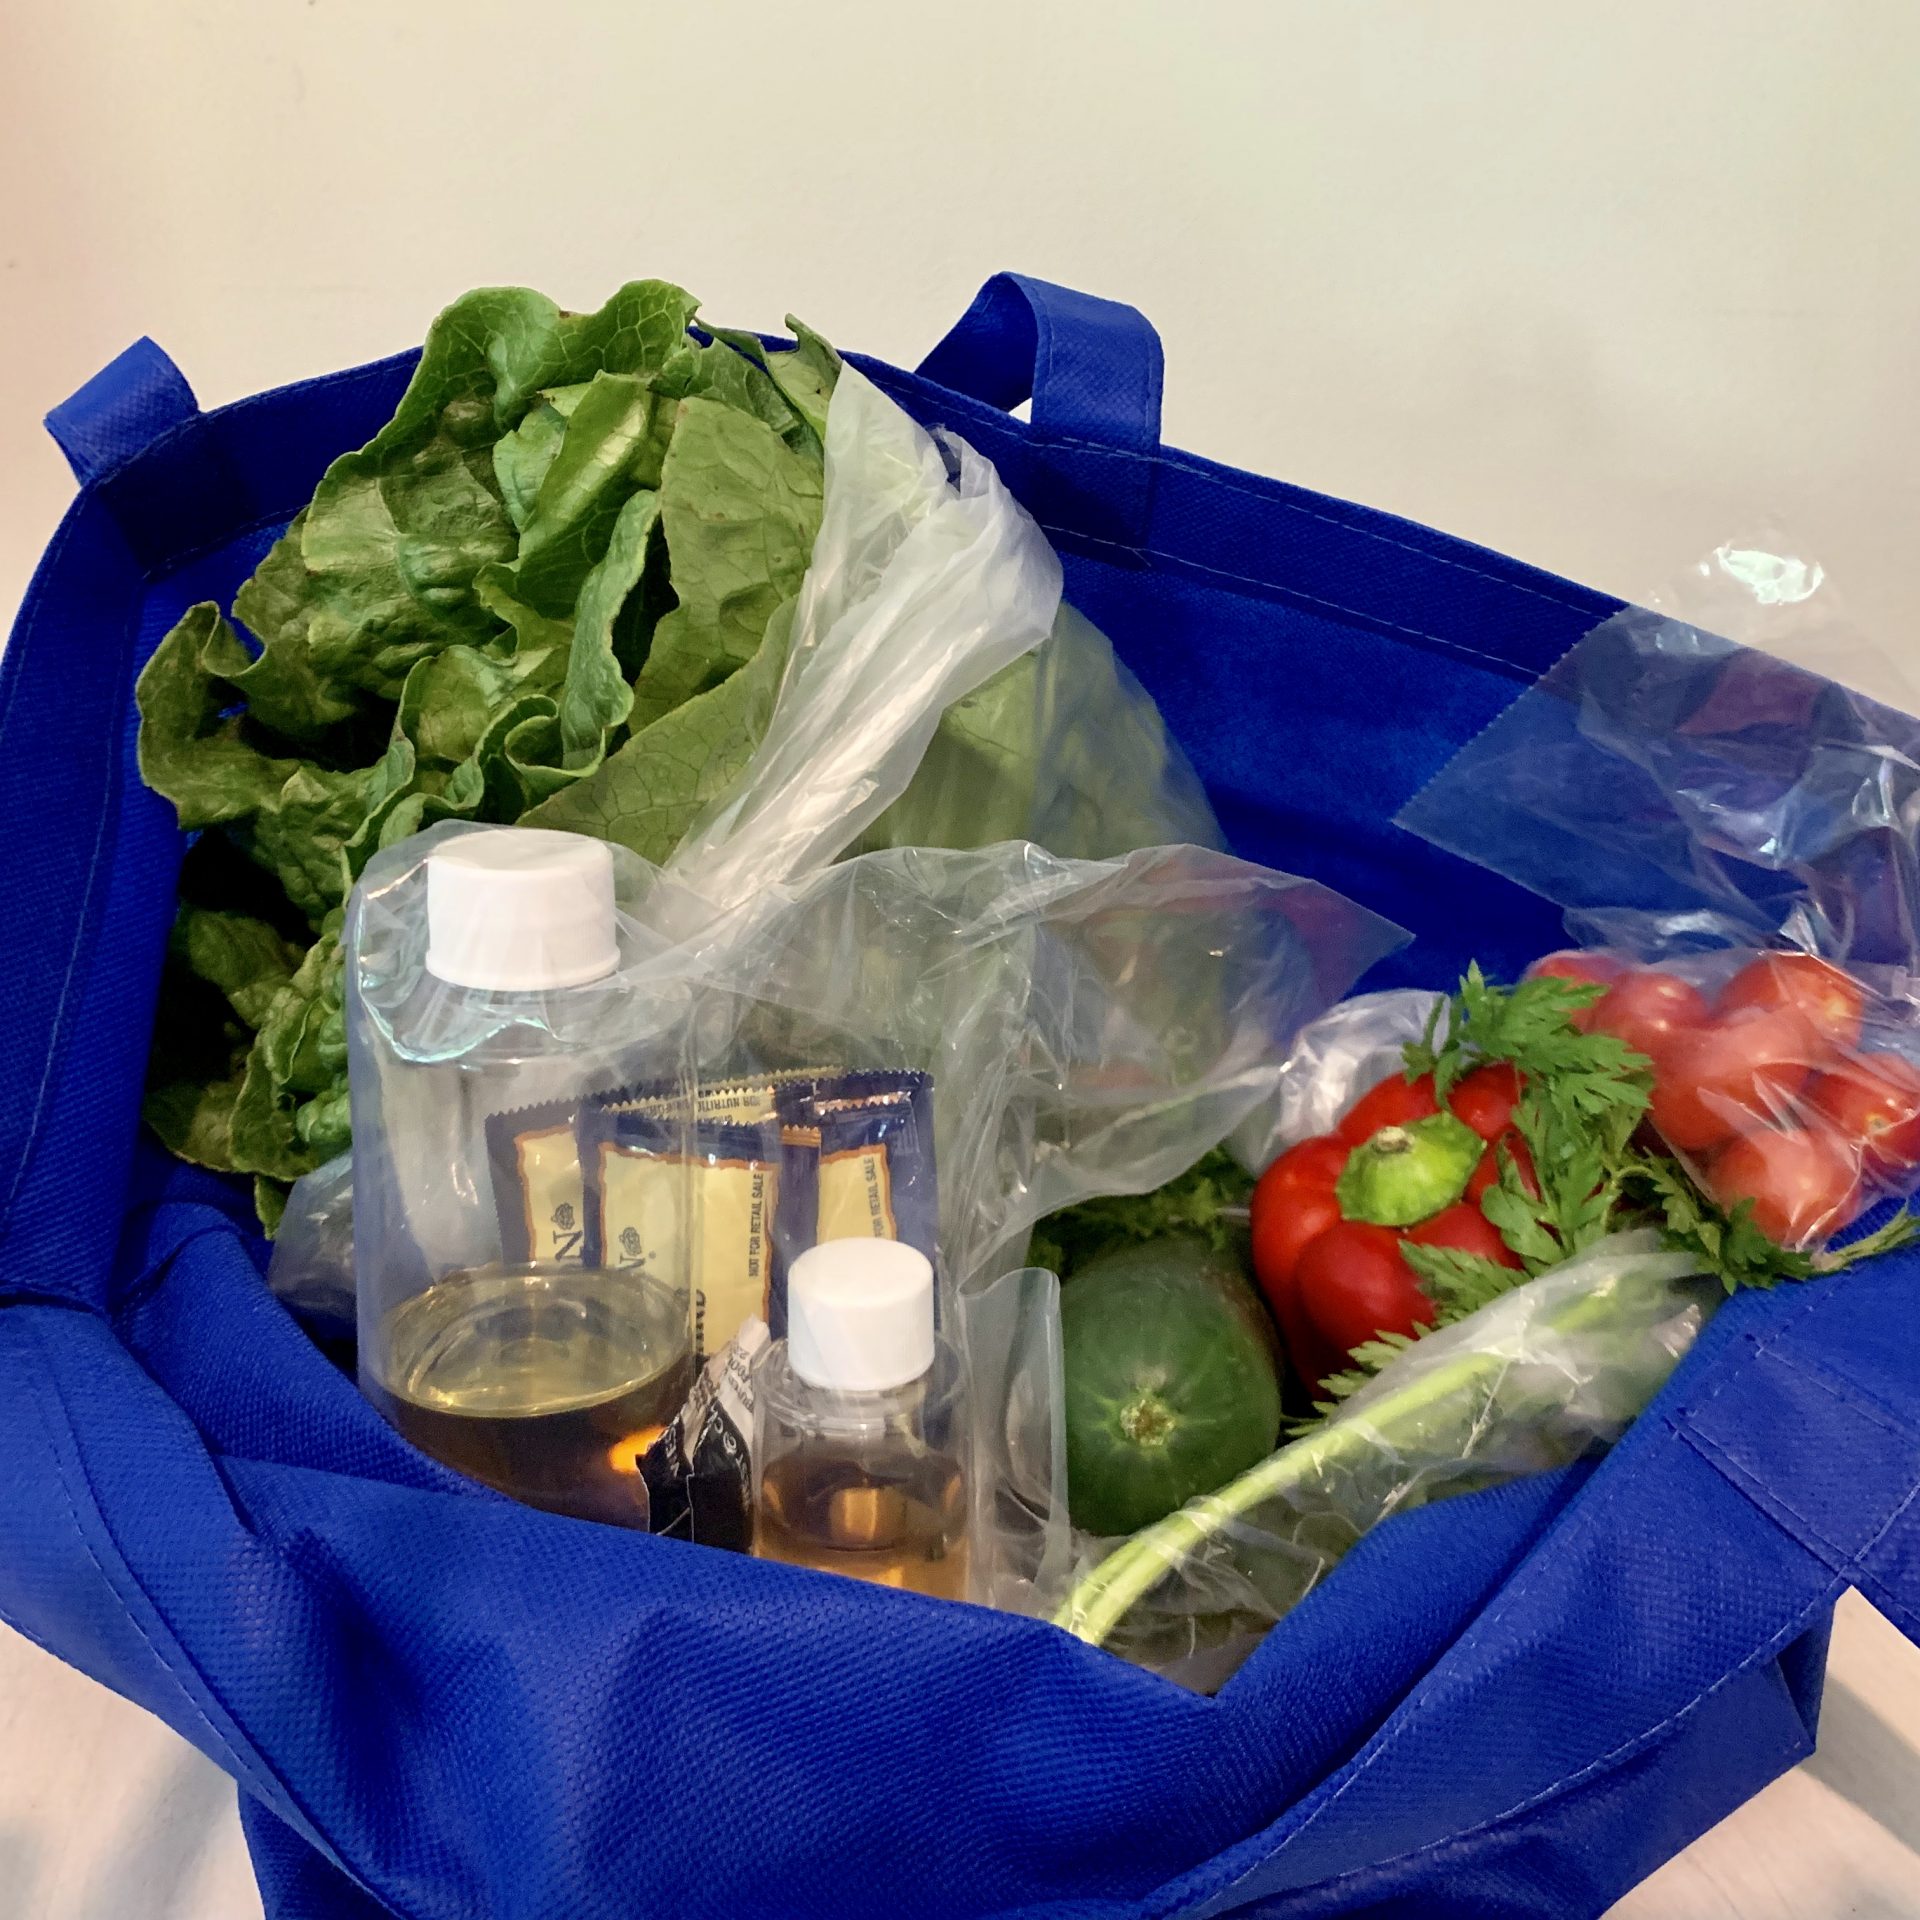 TWK salad kit for kids in need